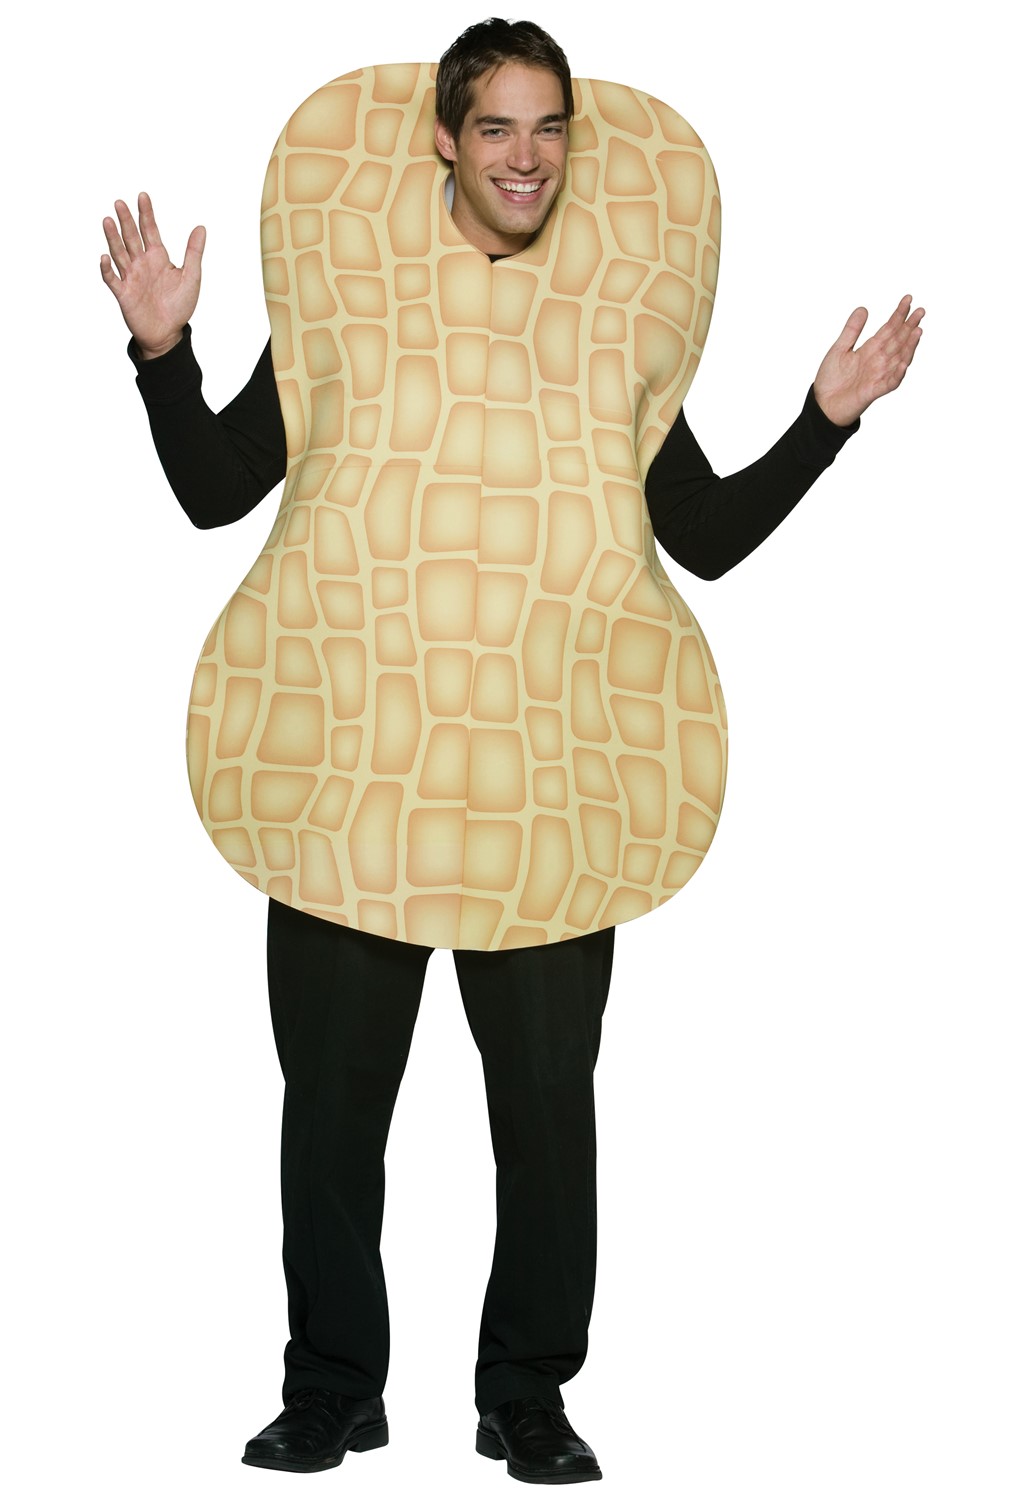 Domino Game Funny Adult Unisex Costume Halloween Rasta Imposta 